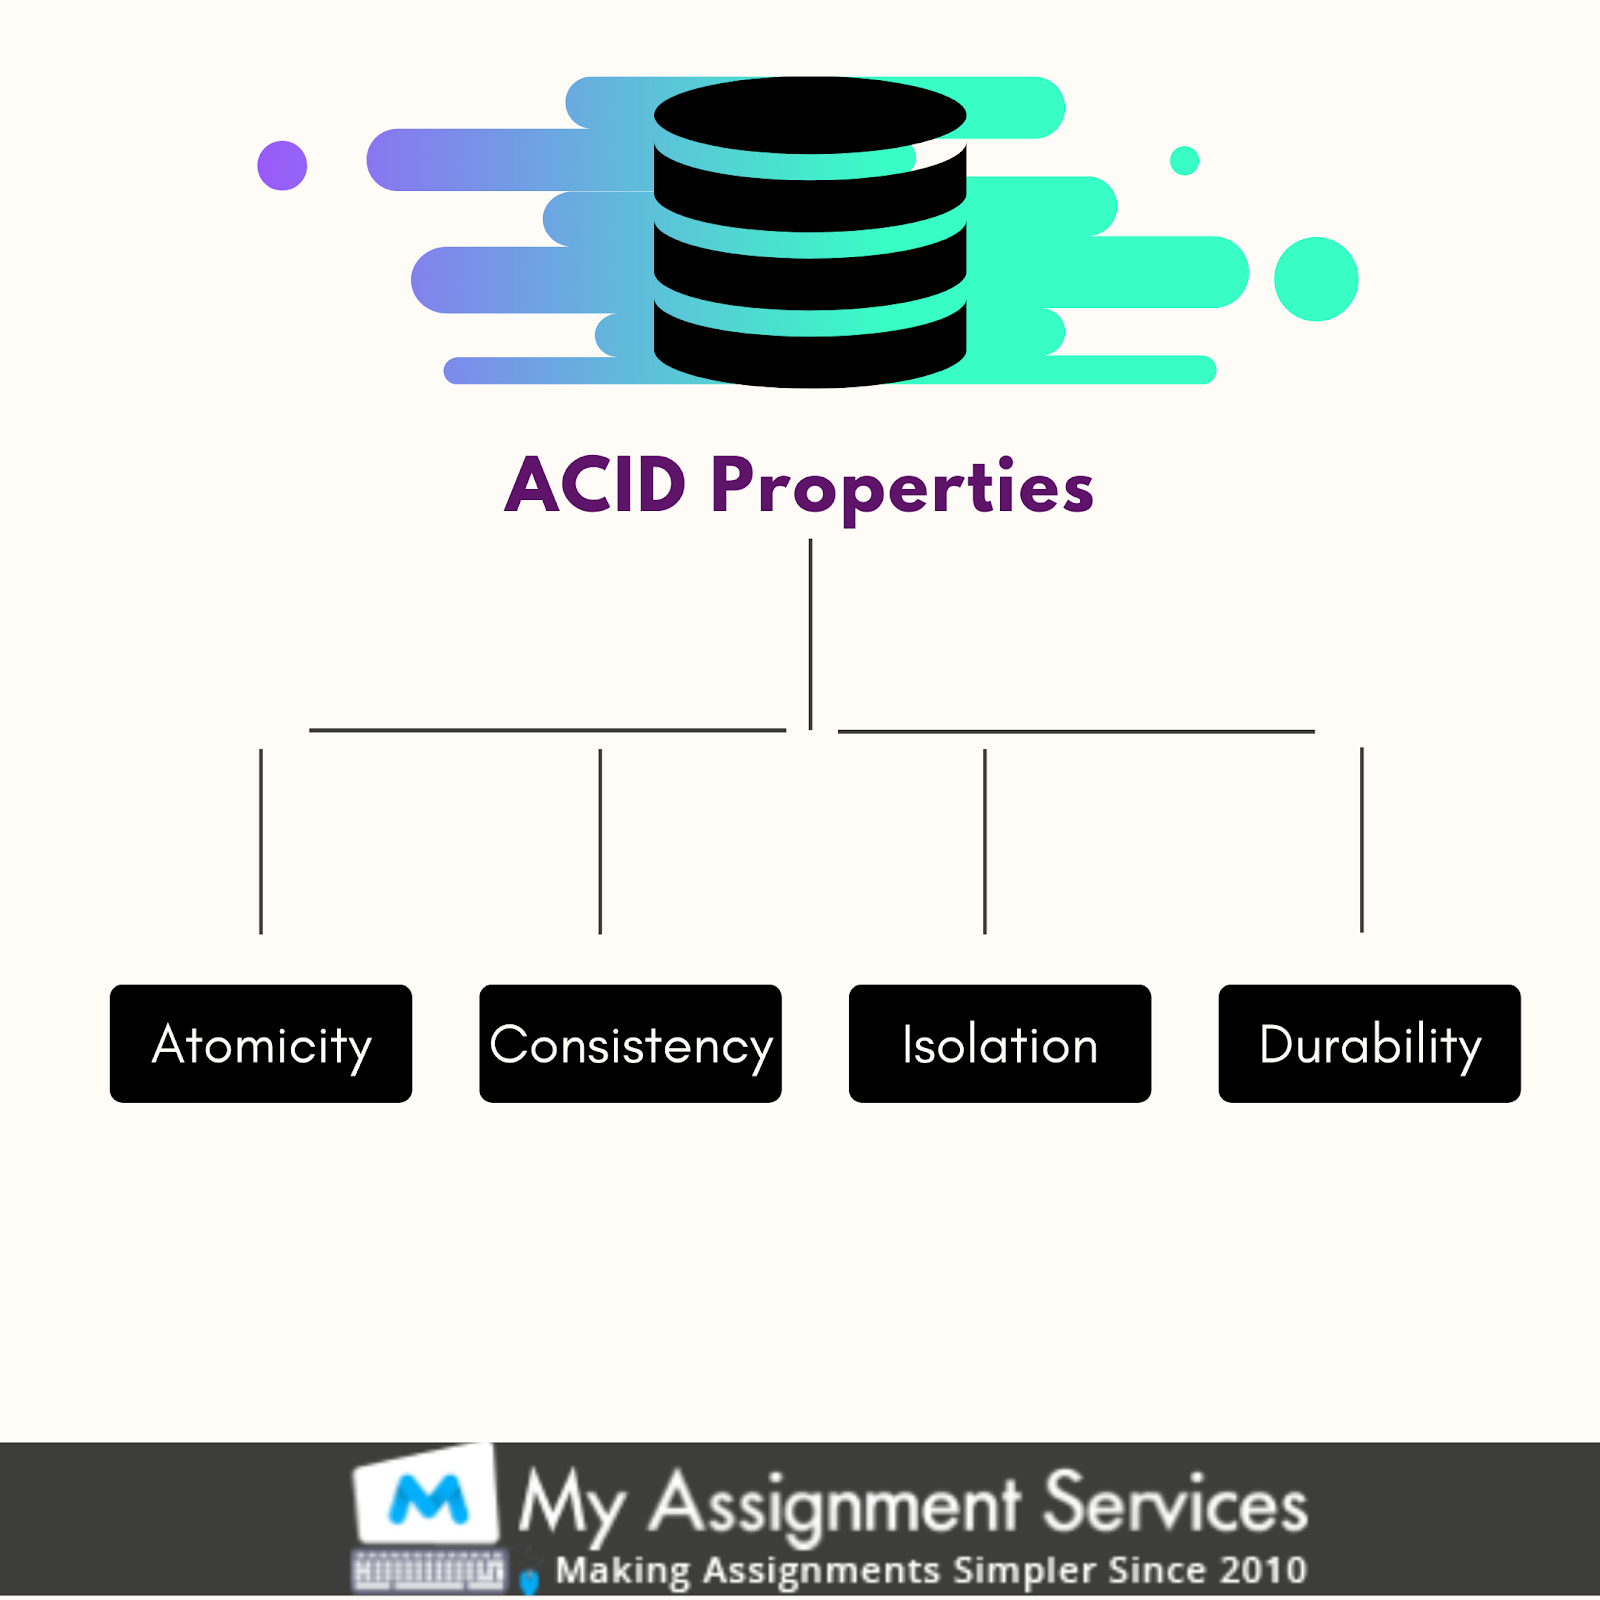 ACID Properties In a Database